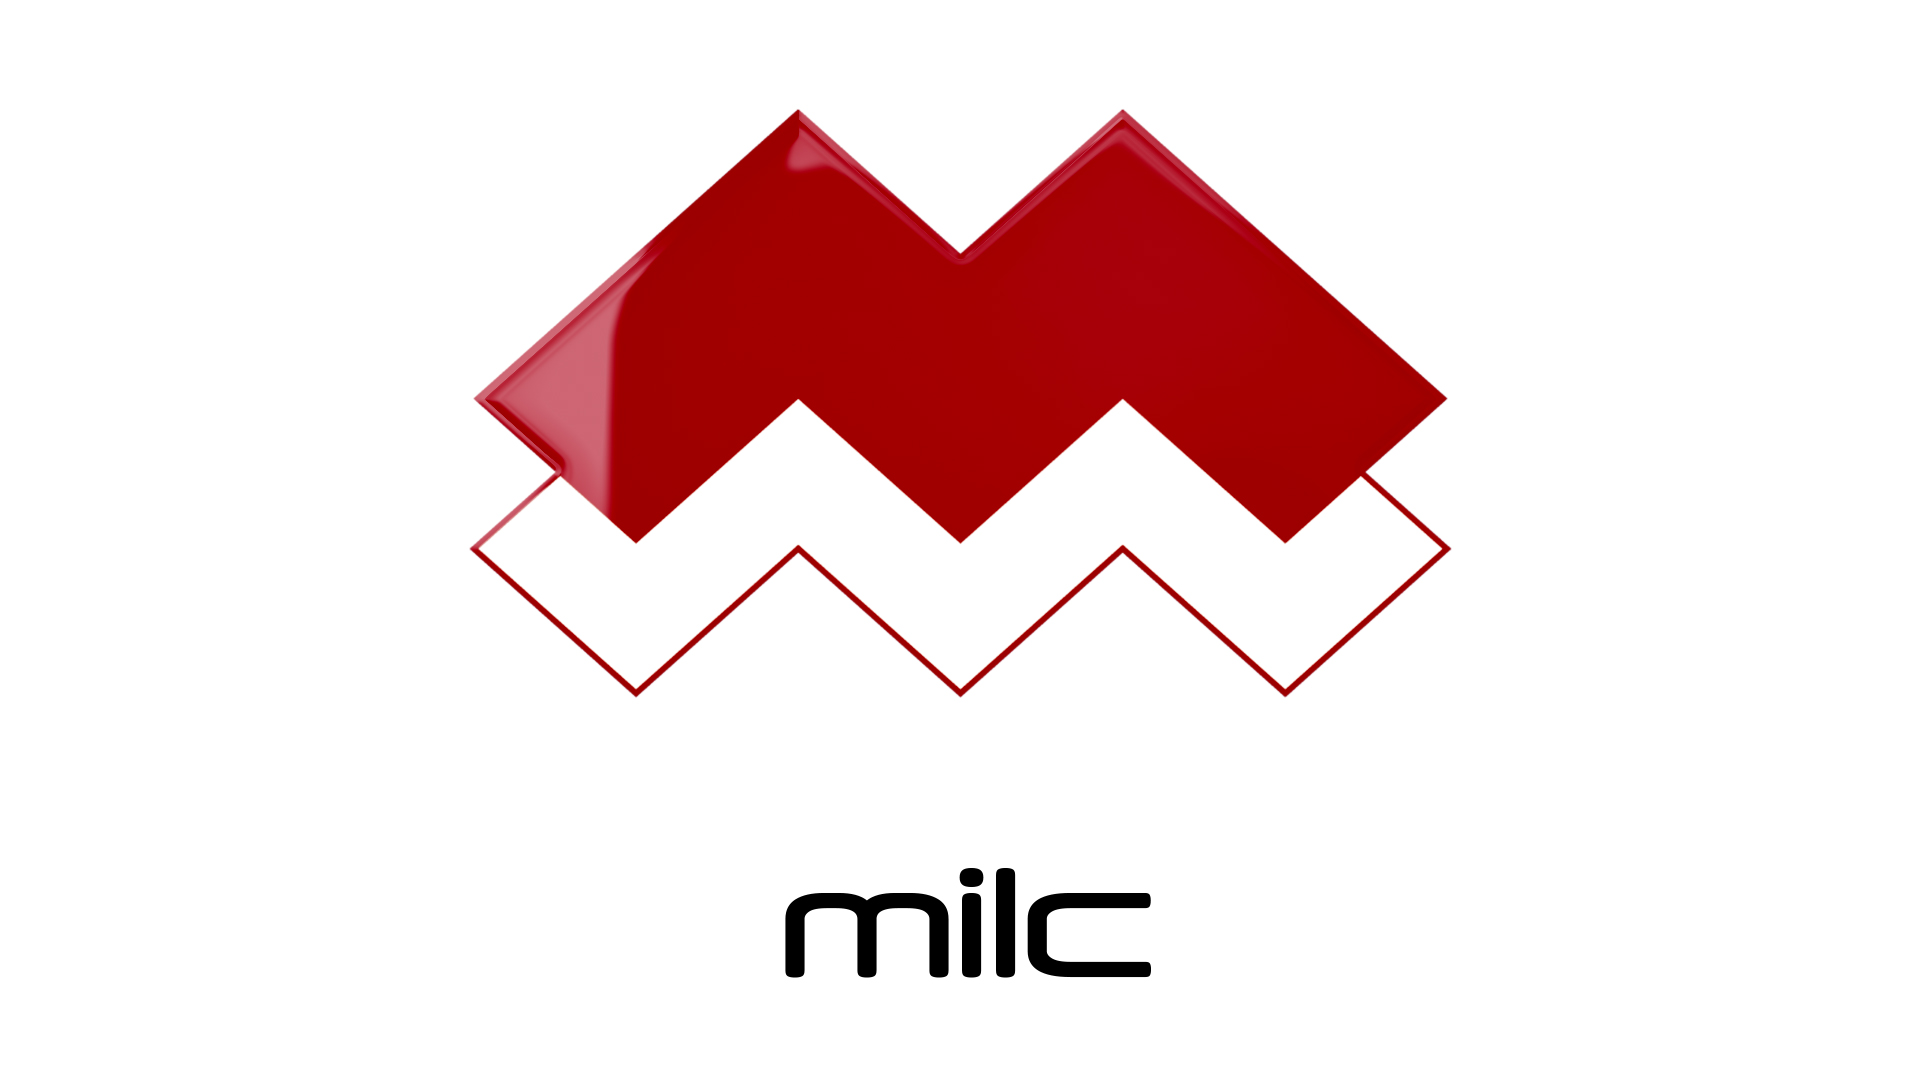 MILC, Media Industry Licensing Content